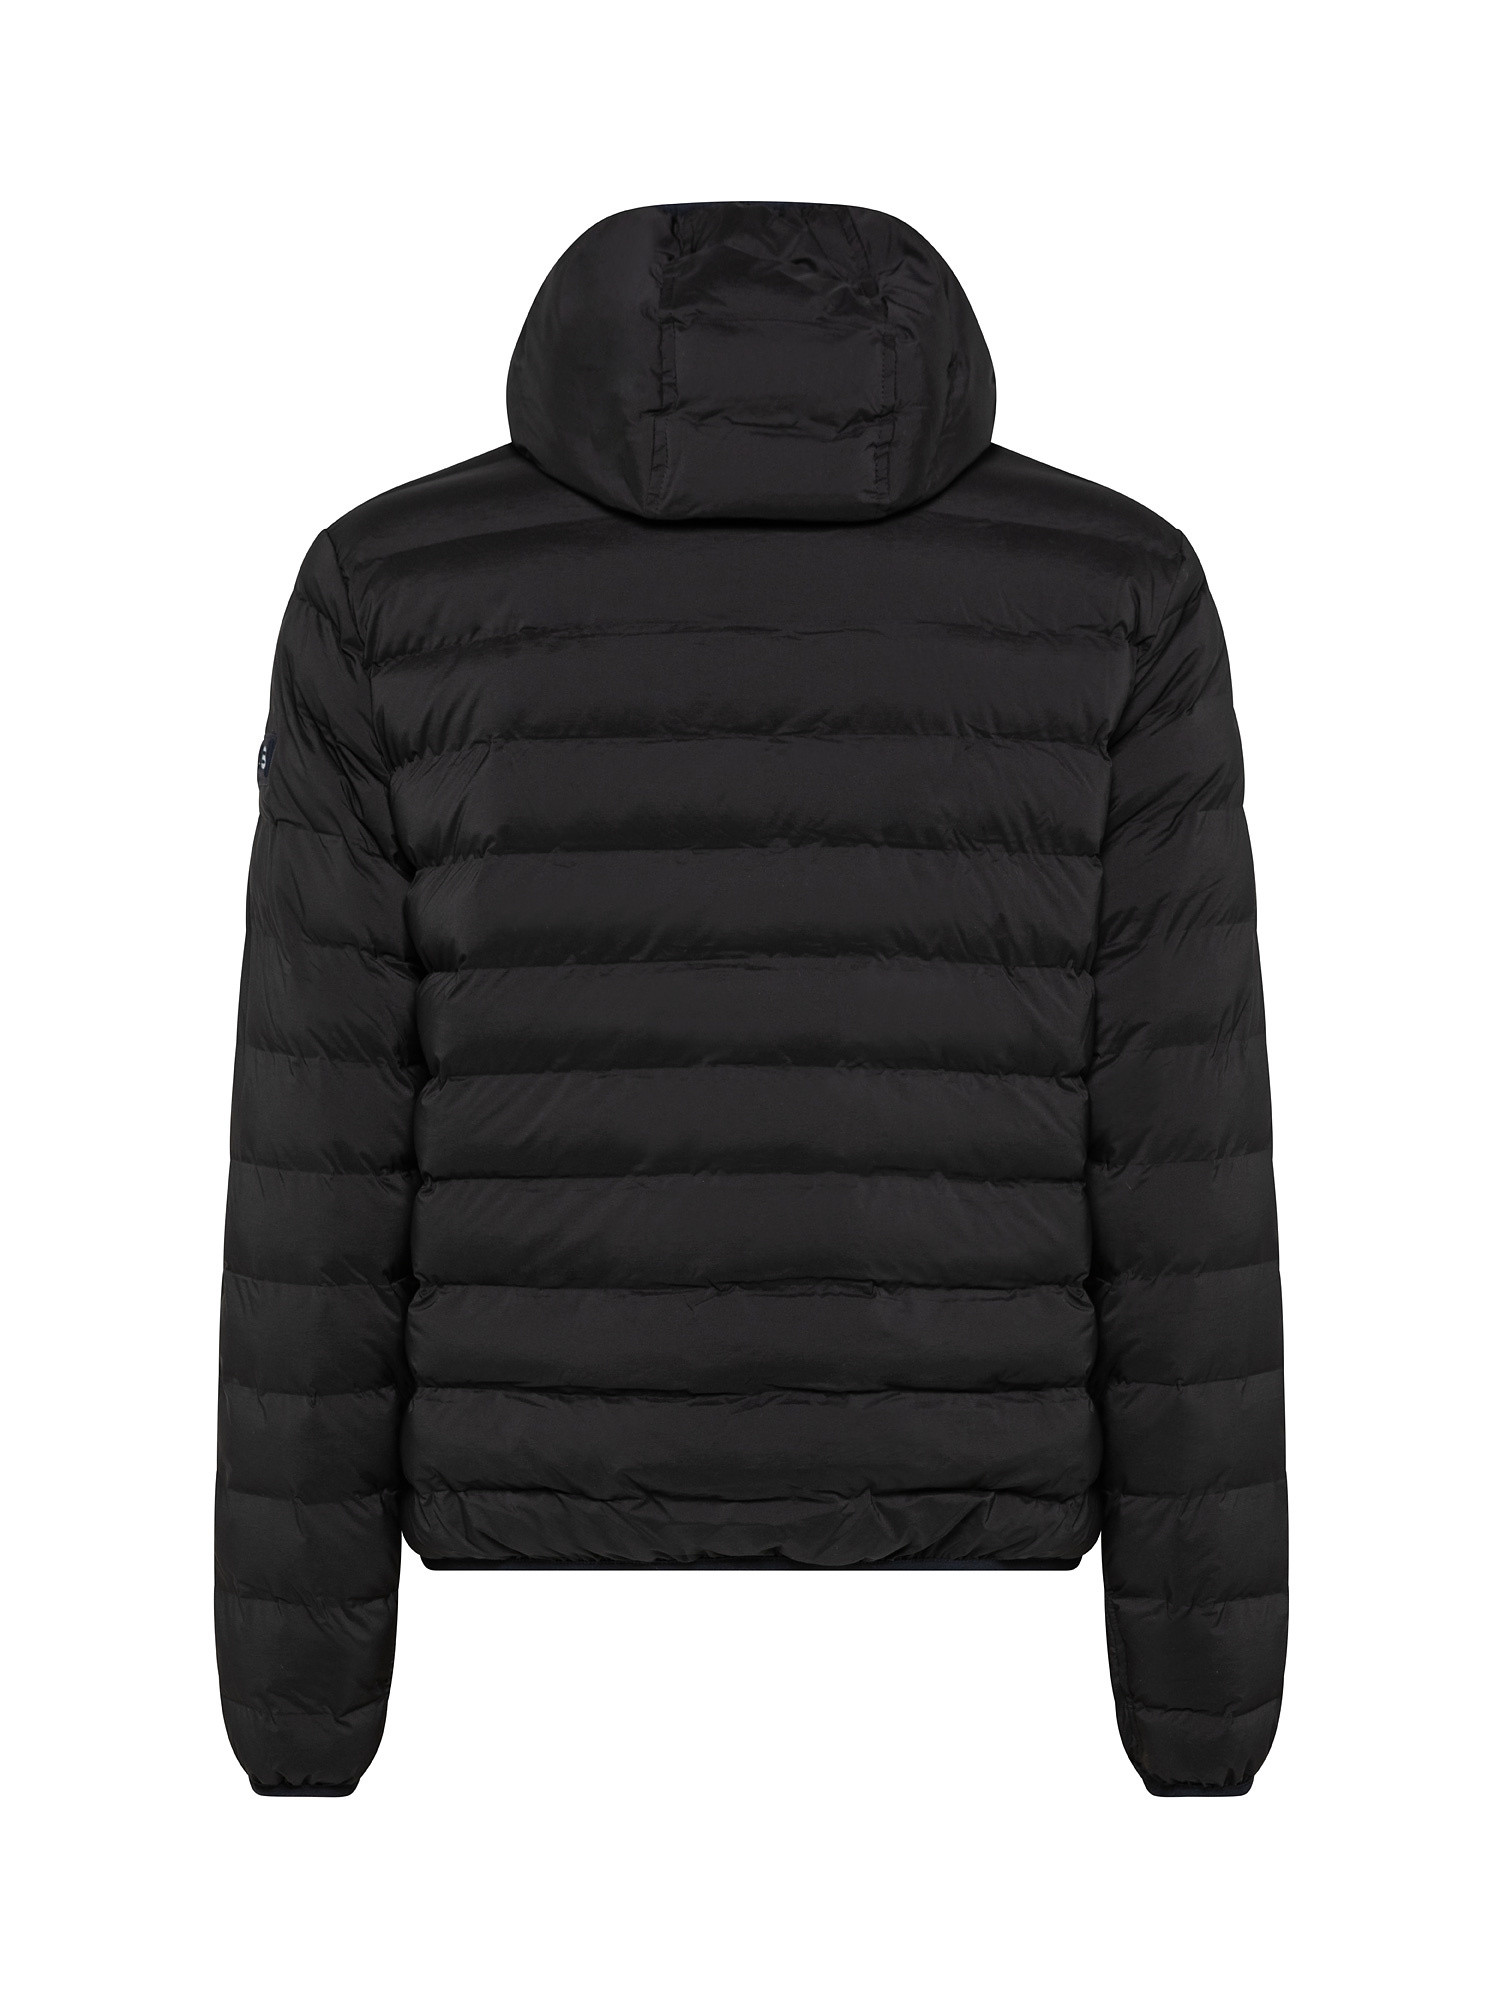 Short down jacket with padding, Black, large image number 1